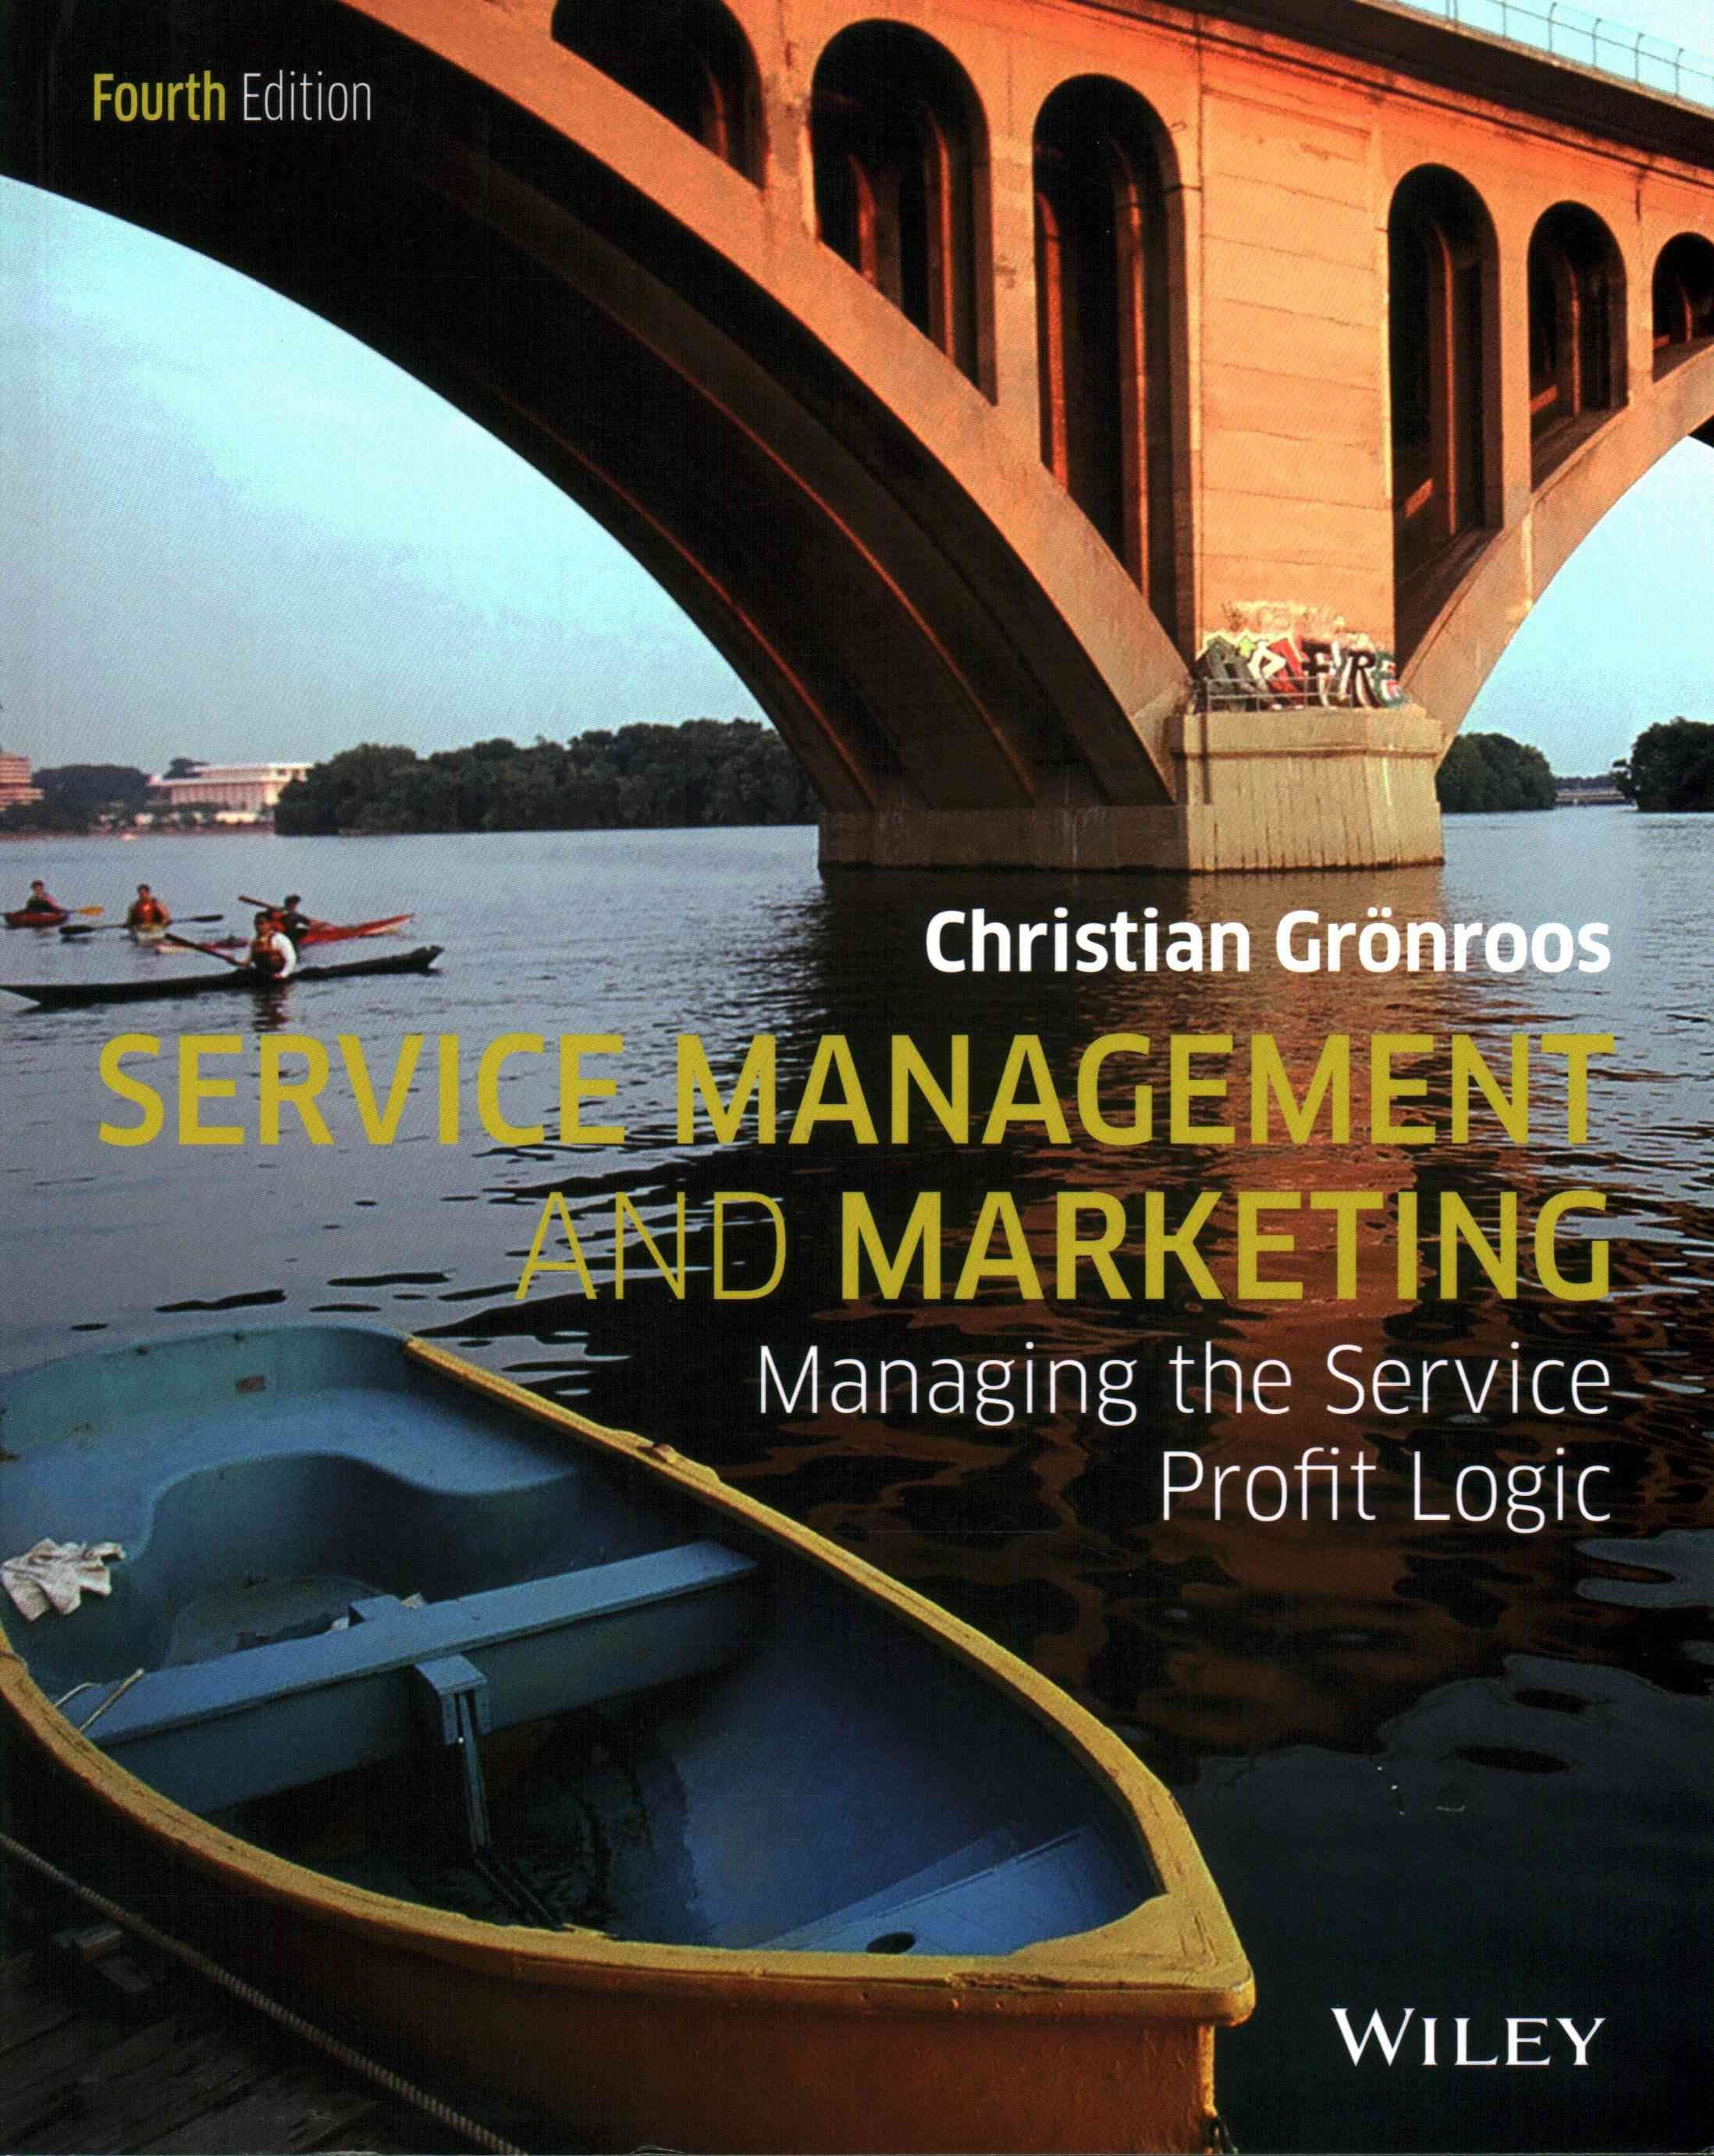 Service Management and Marketing - Managing the Service Profit Logic 4e